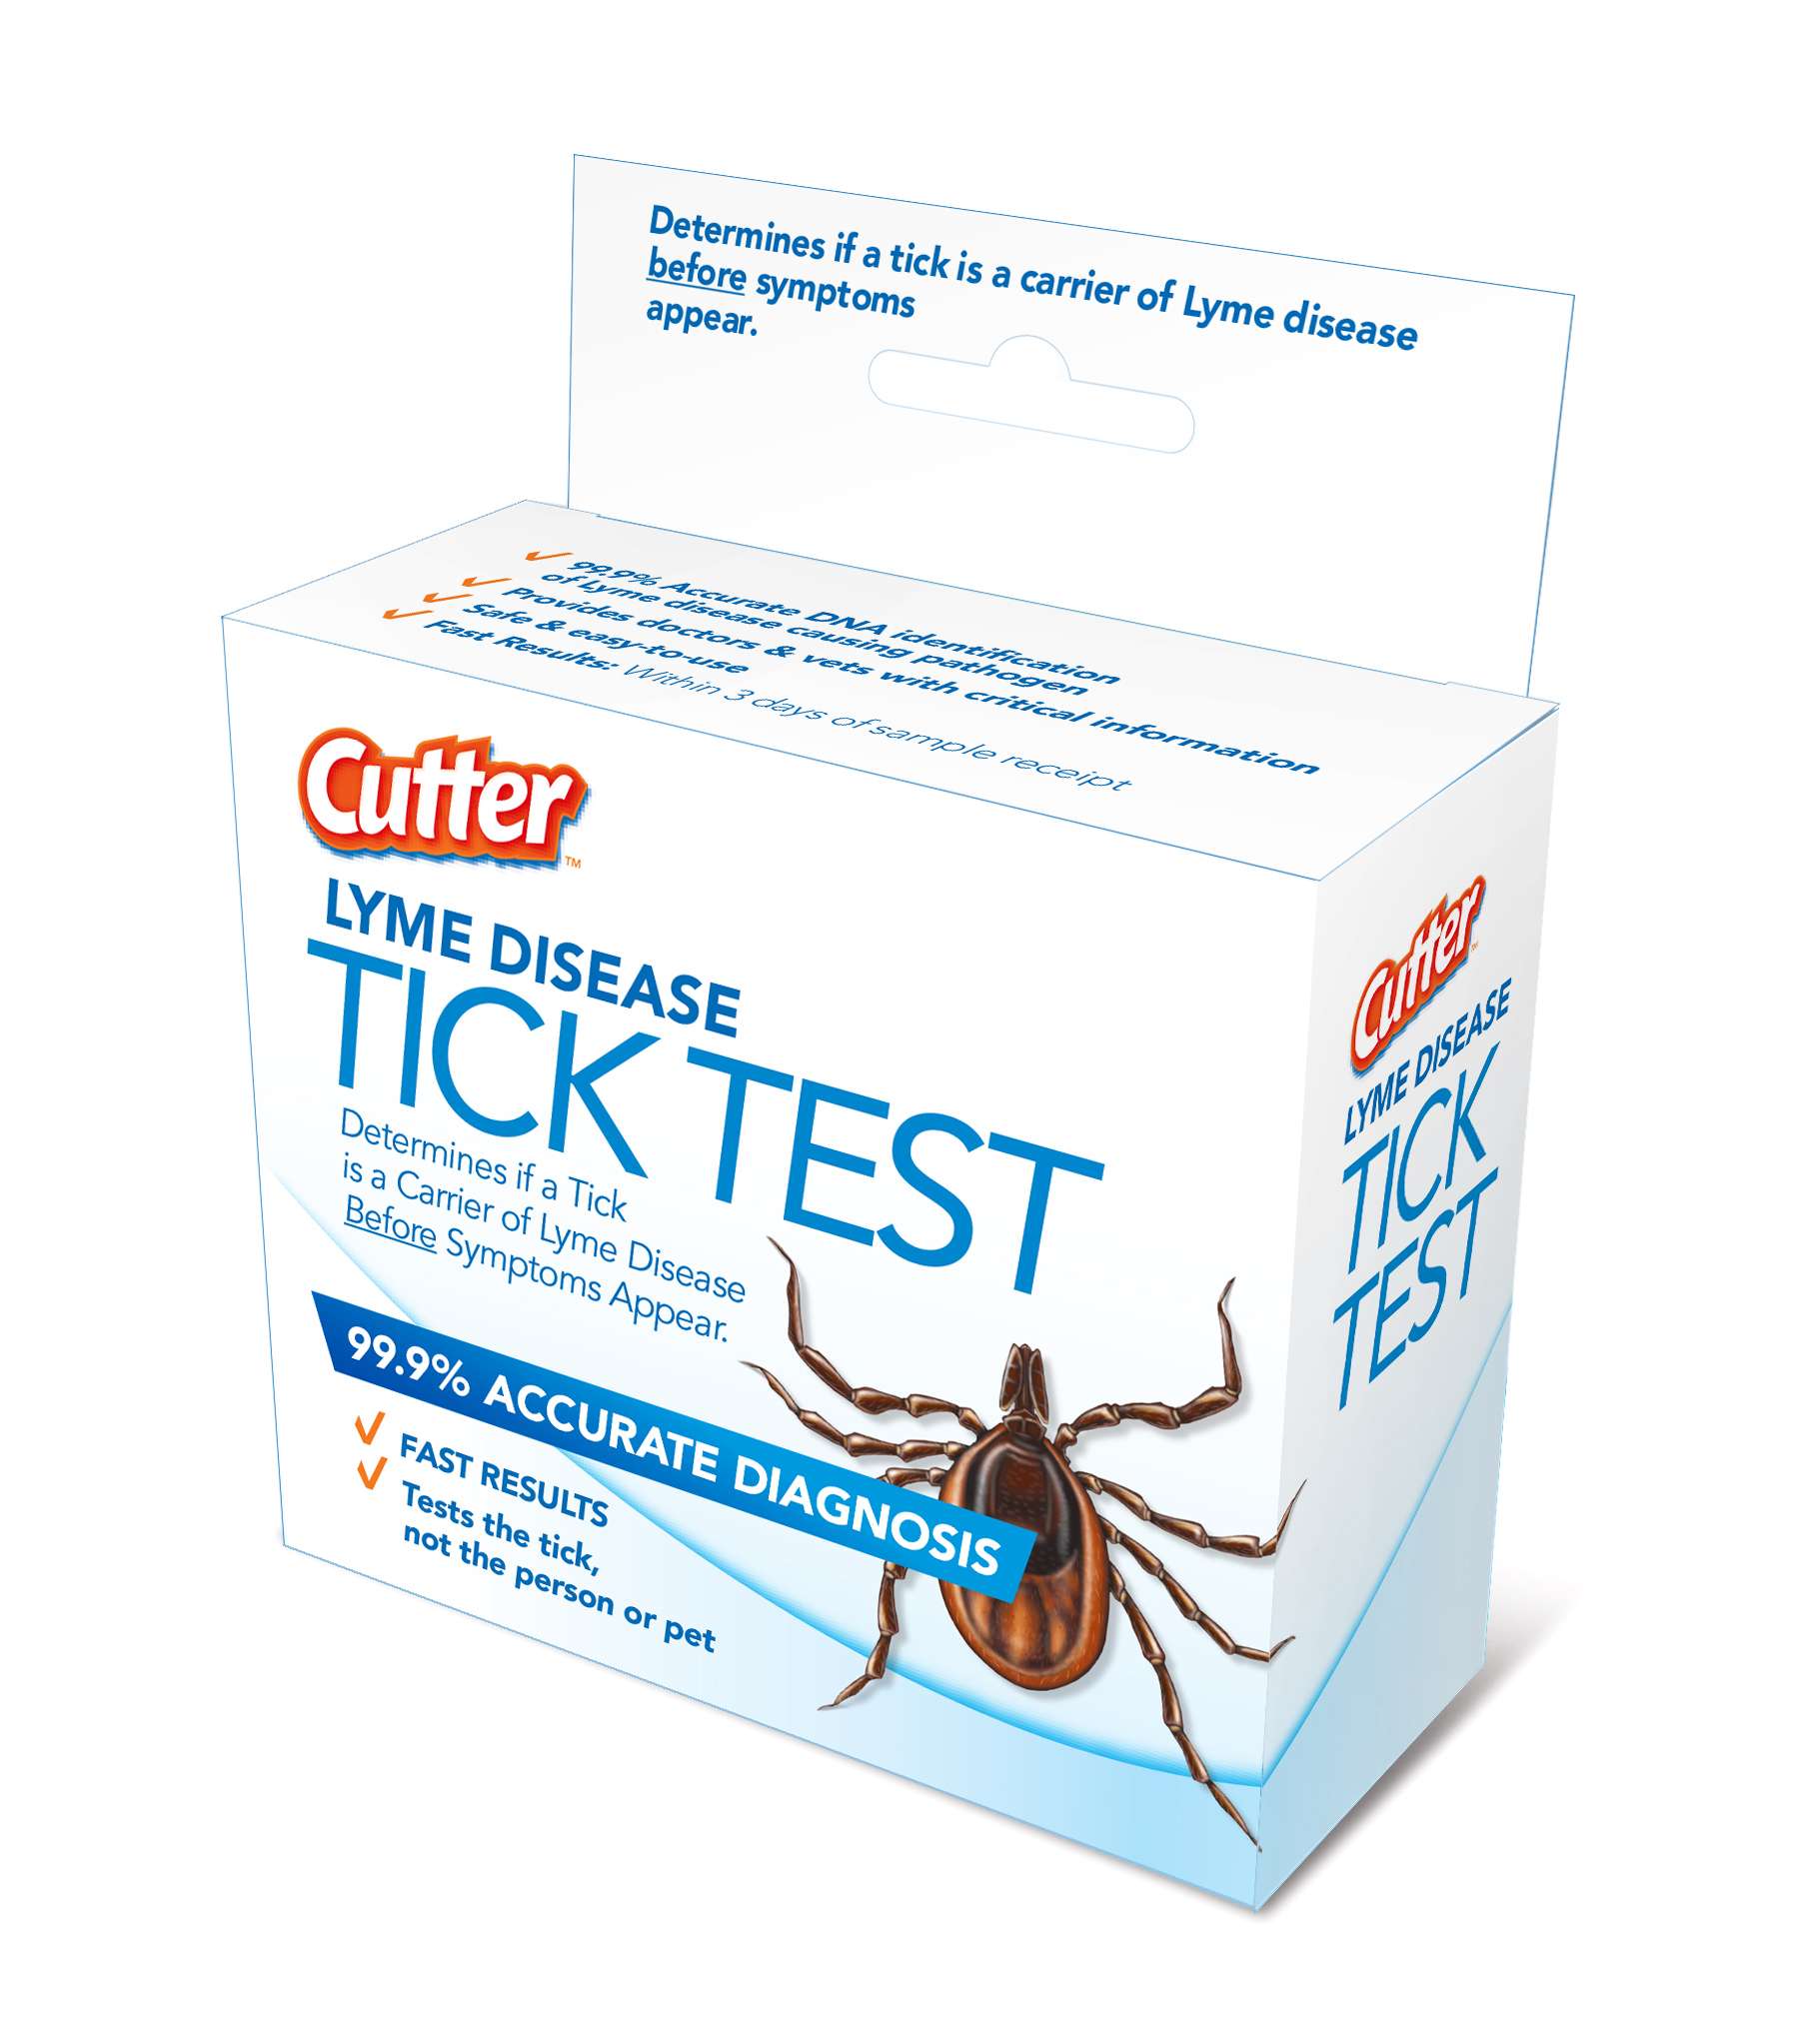 Cutter Lyme Disease Tick Test